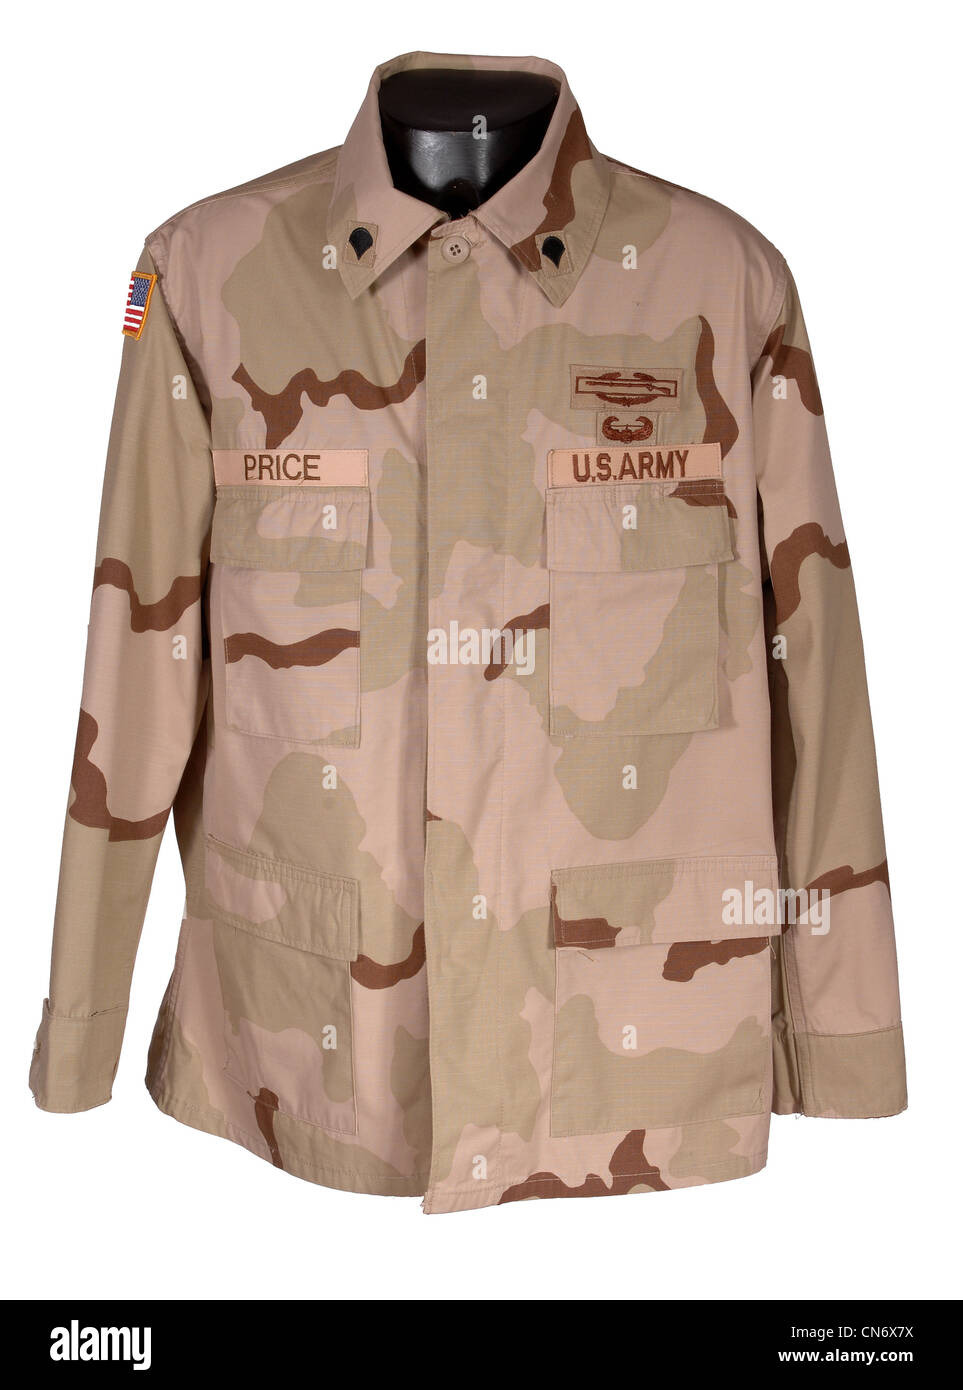 US Army desert camouflage jacket. Gulf War Stock Photo - Alamy